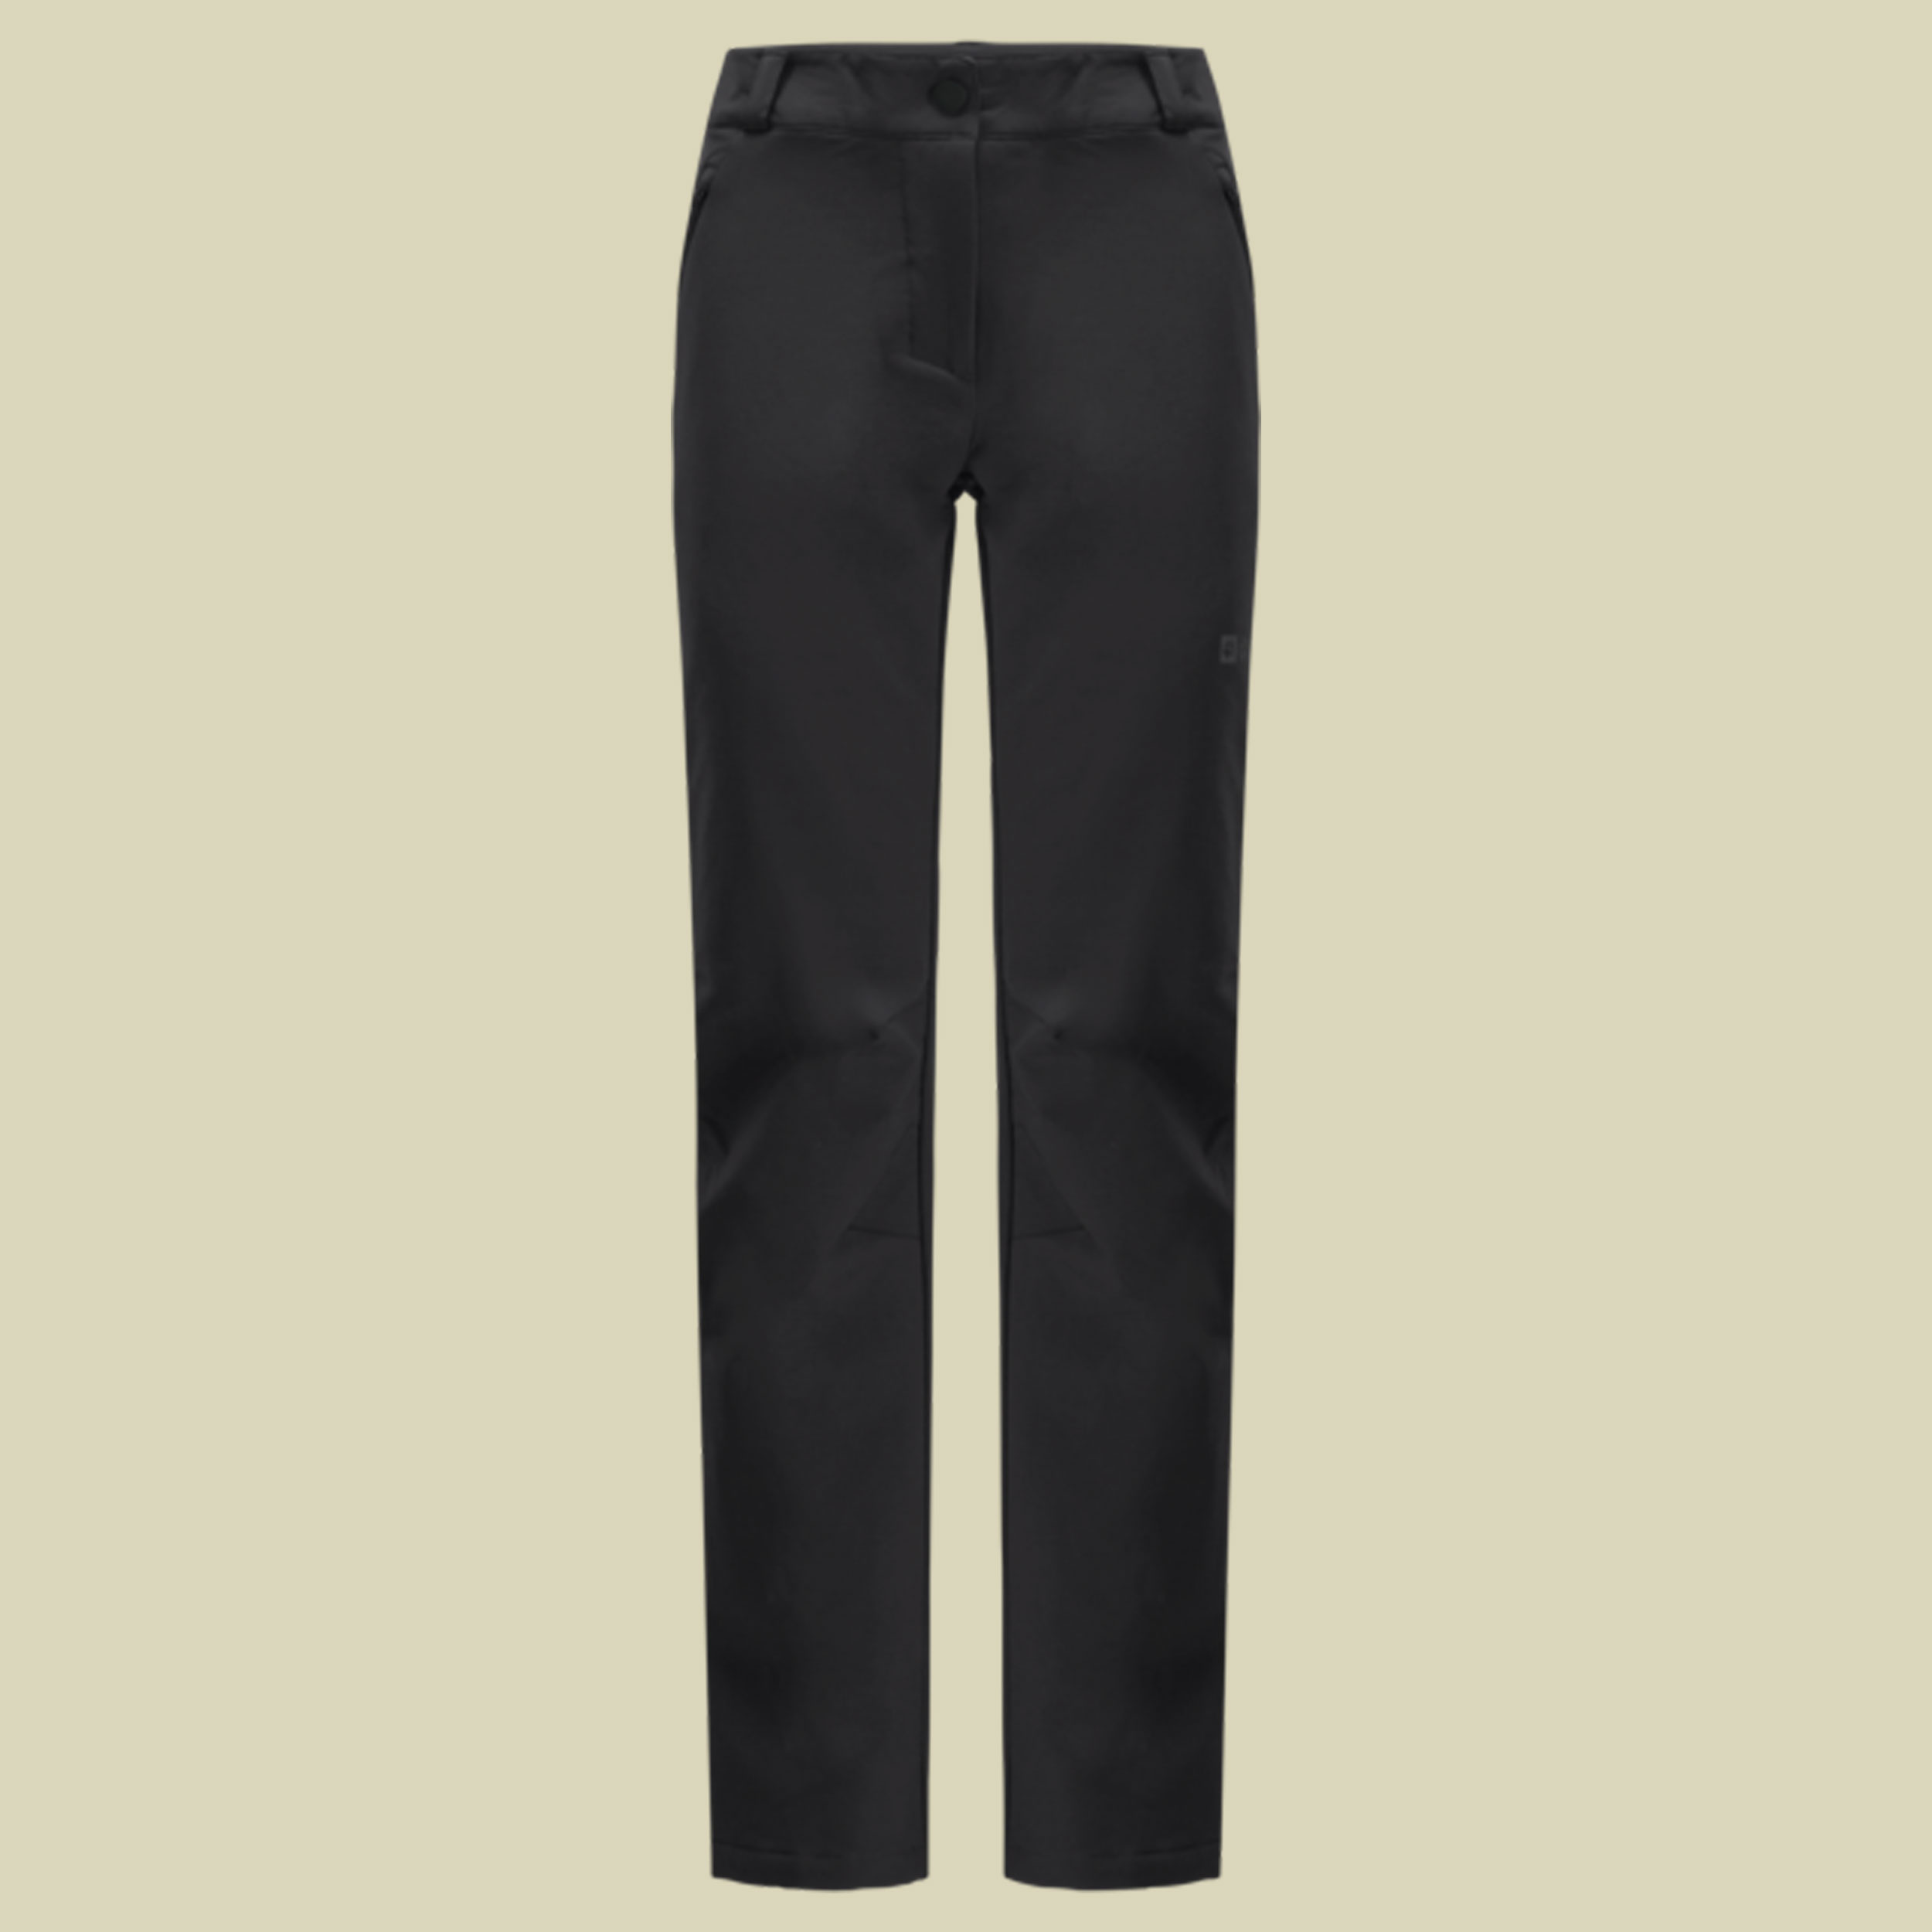 Activate Thermic Pants Women Größe 40-short Farbe black